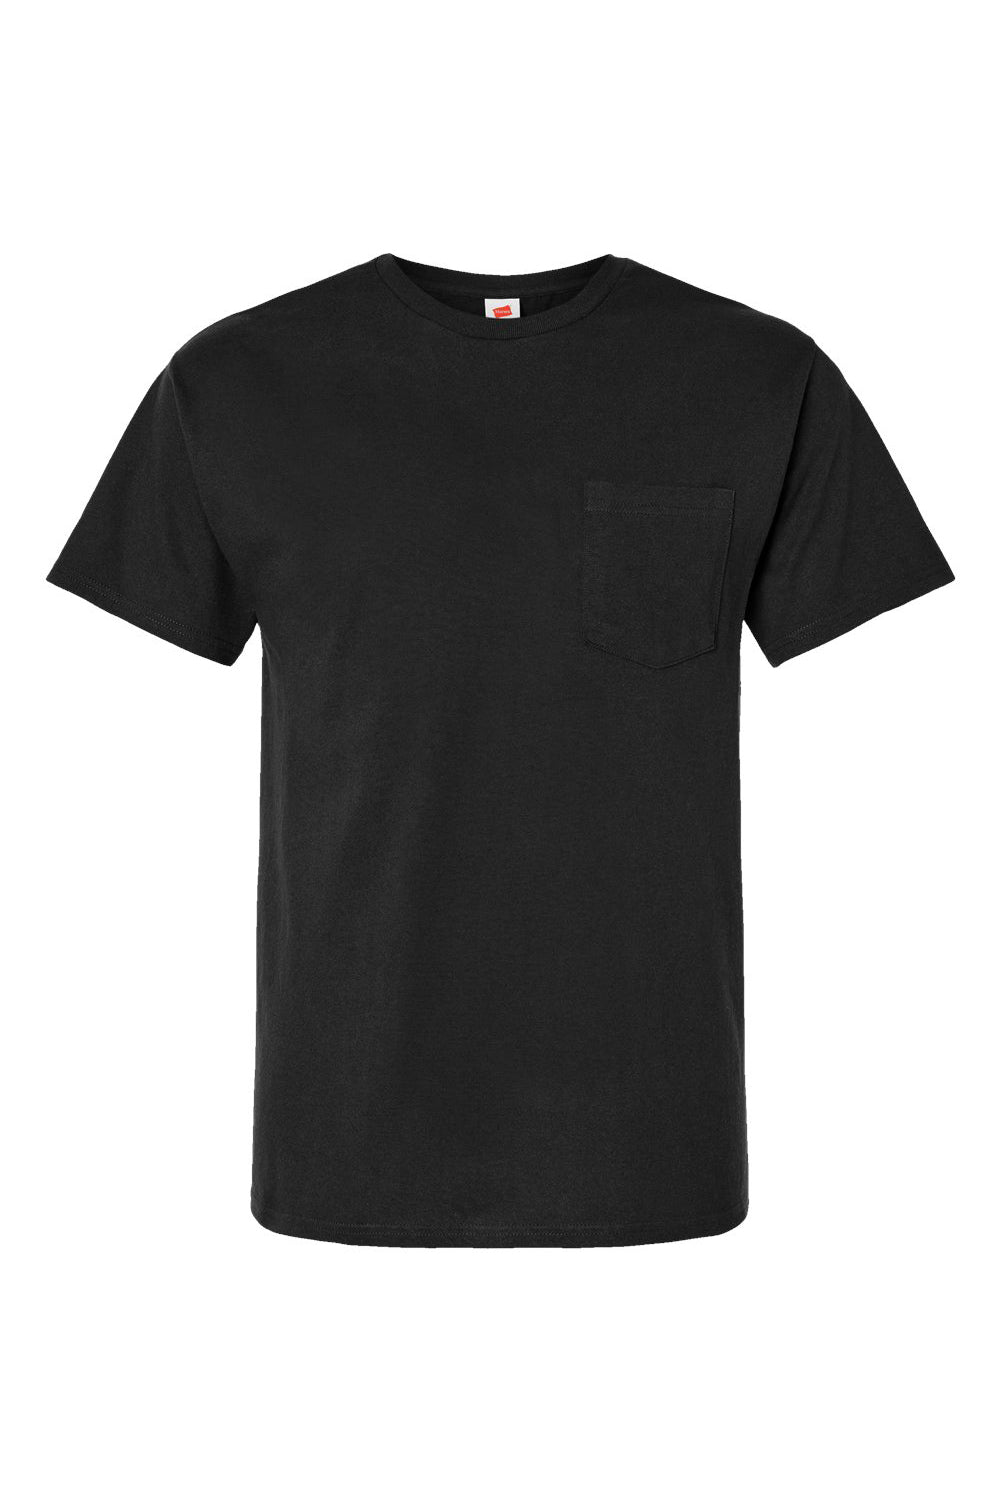 Hanes 5290P Mens Essential Short Sleeve Crewneck T-Shirt w/ Pocket Black Flat Front